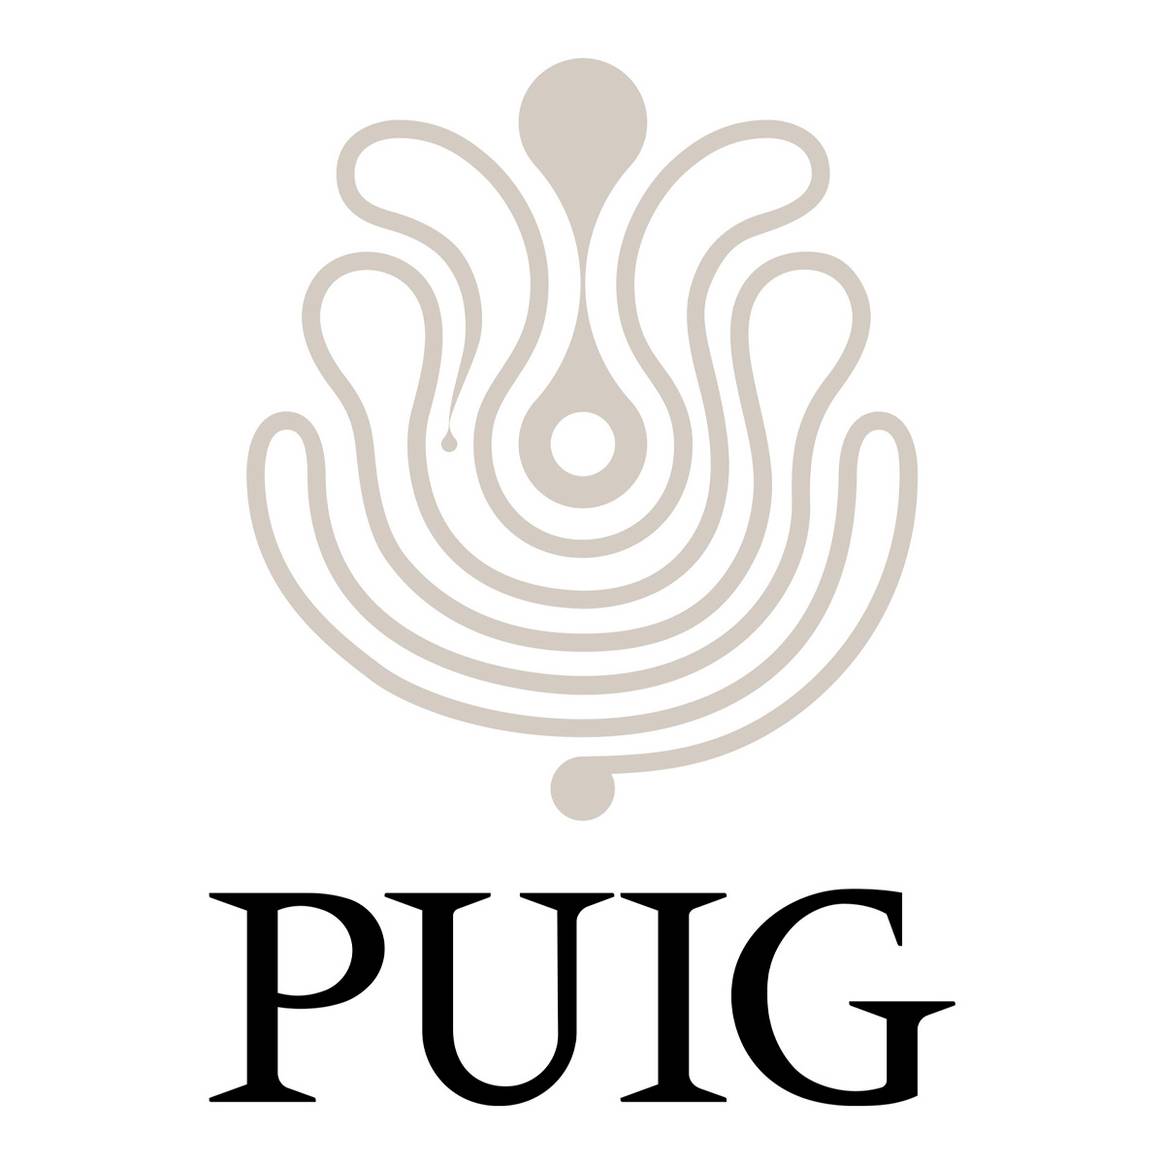 Puig's new logo designed by M/M.